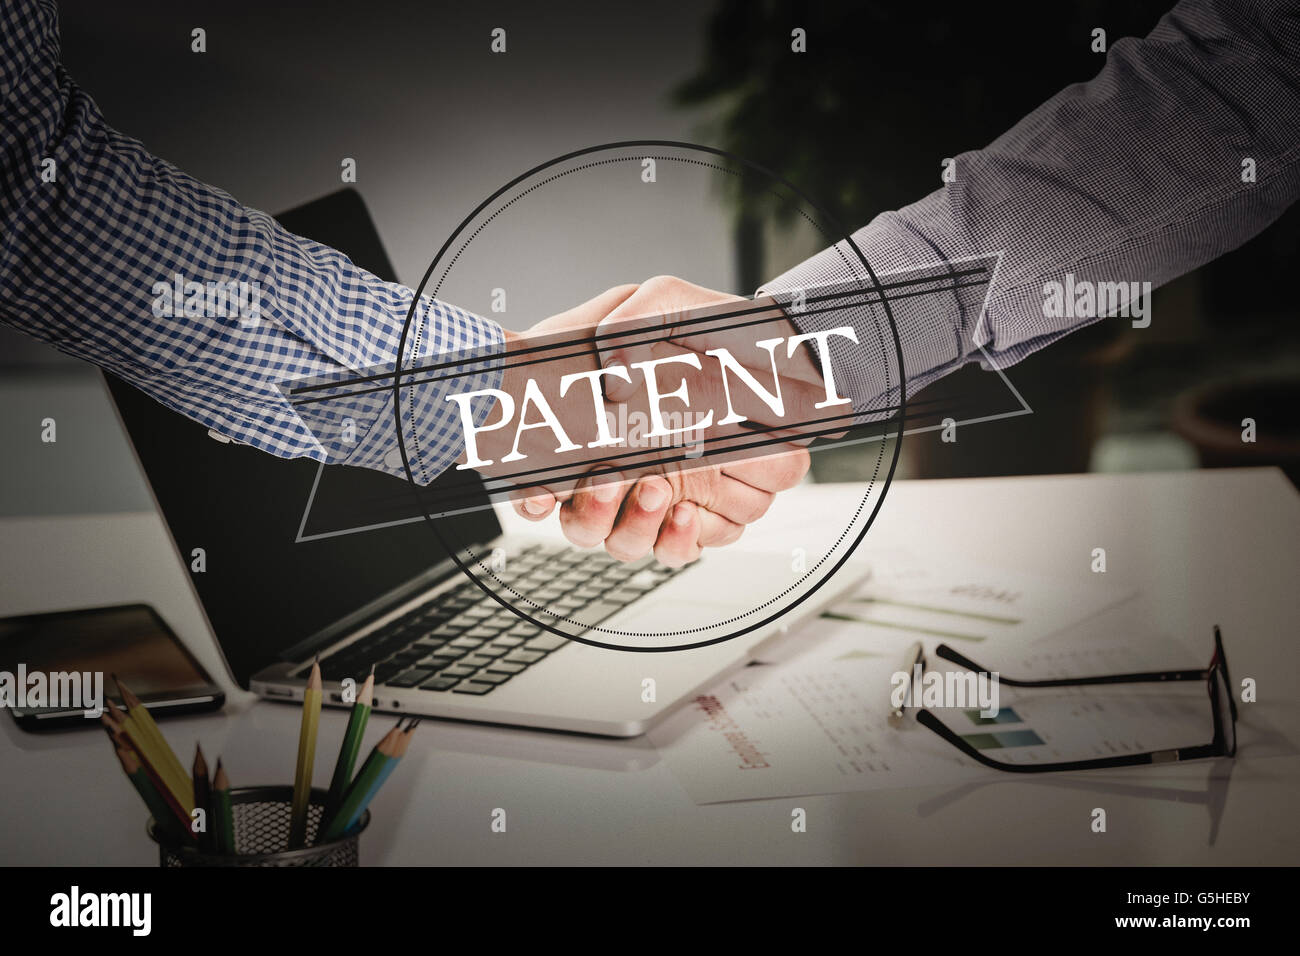 BUSINESS AGREEMENT PARTNERSHIP Patent COMMUNICATION CONCEPT Stock Photo